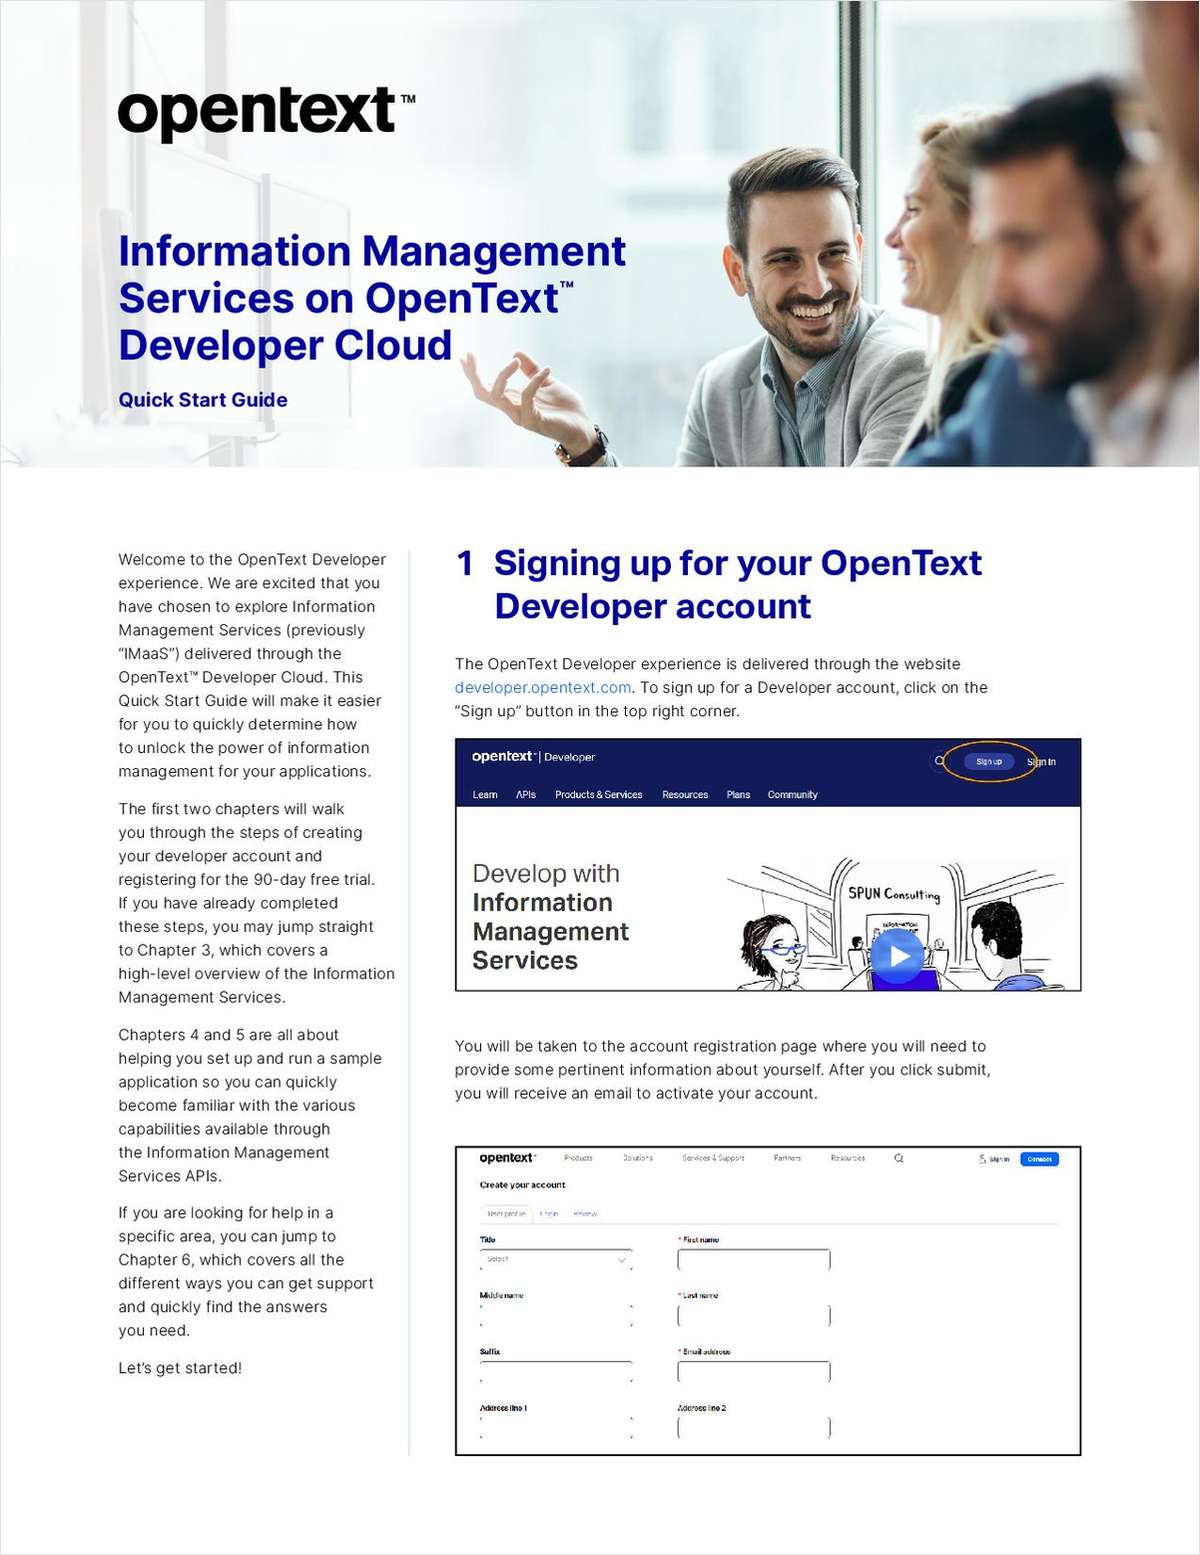 Information Management Services on OpenText™ Developer Cloud